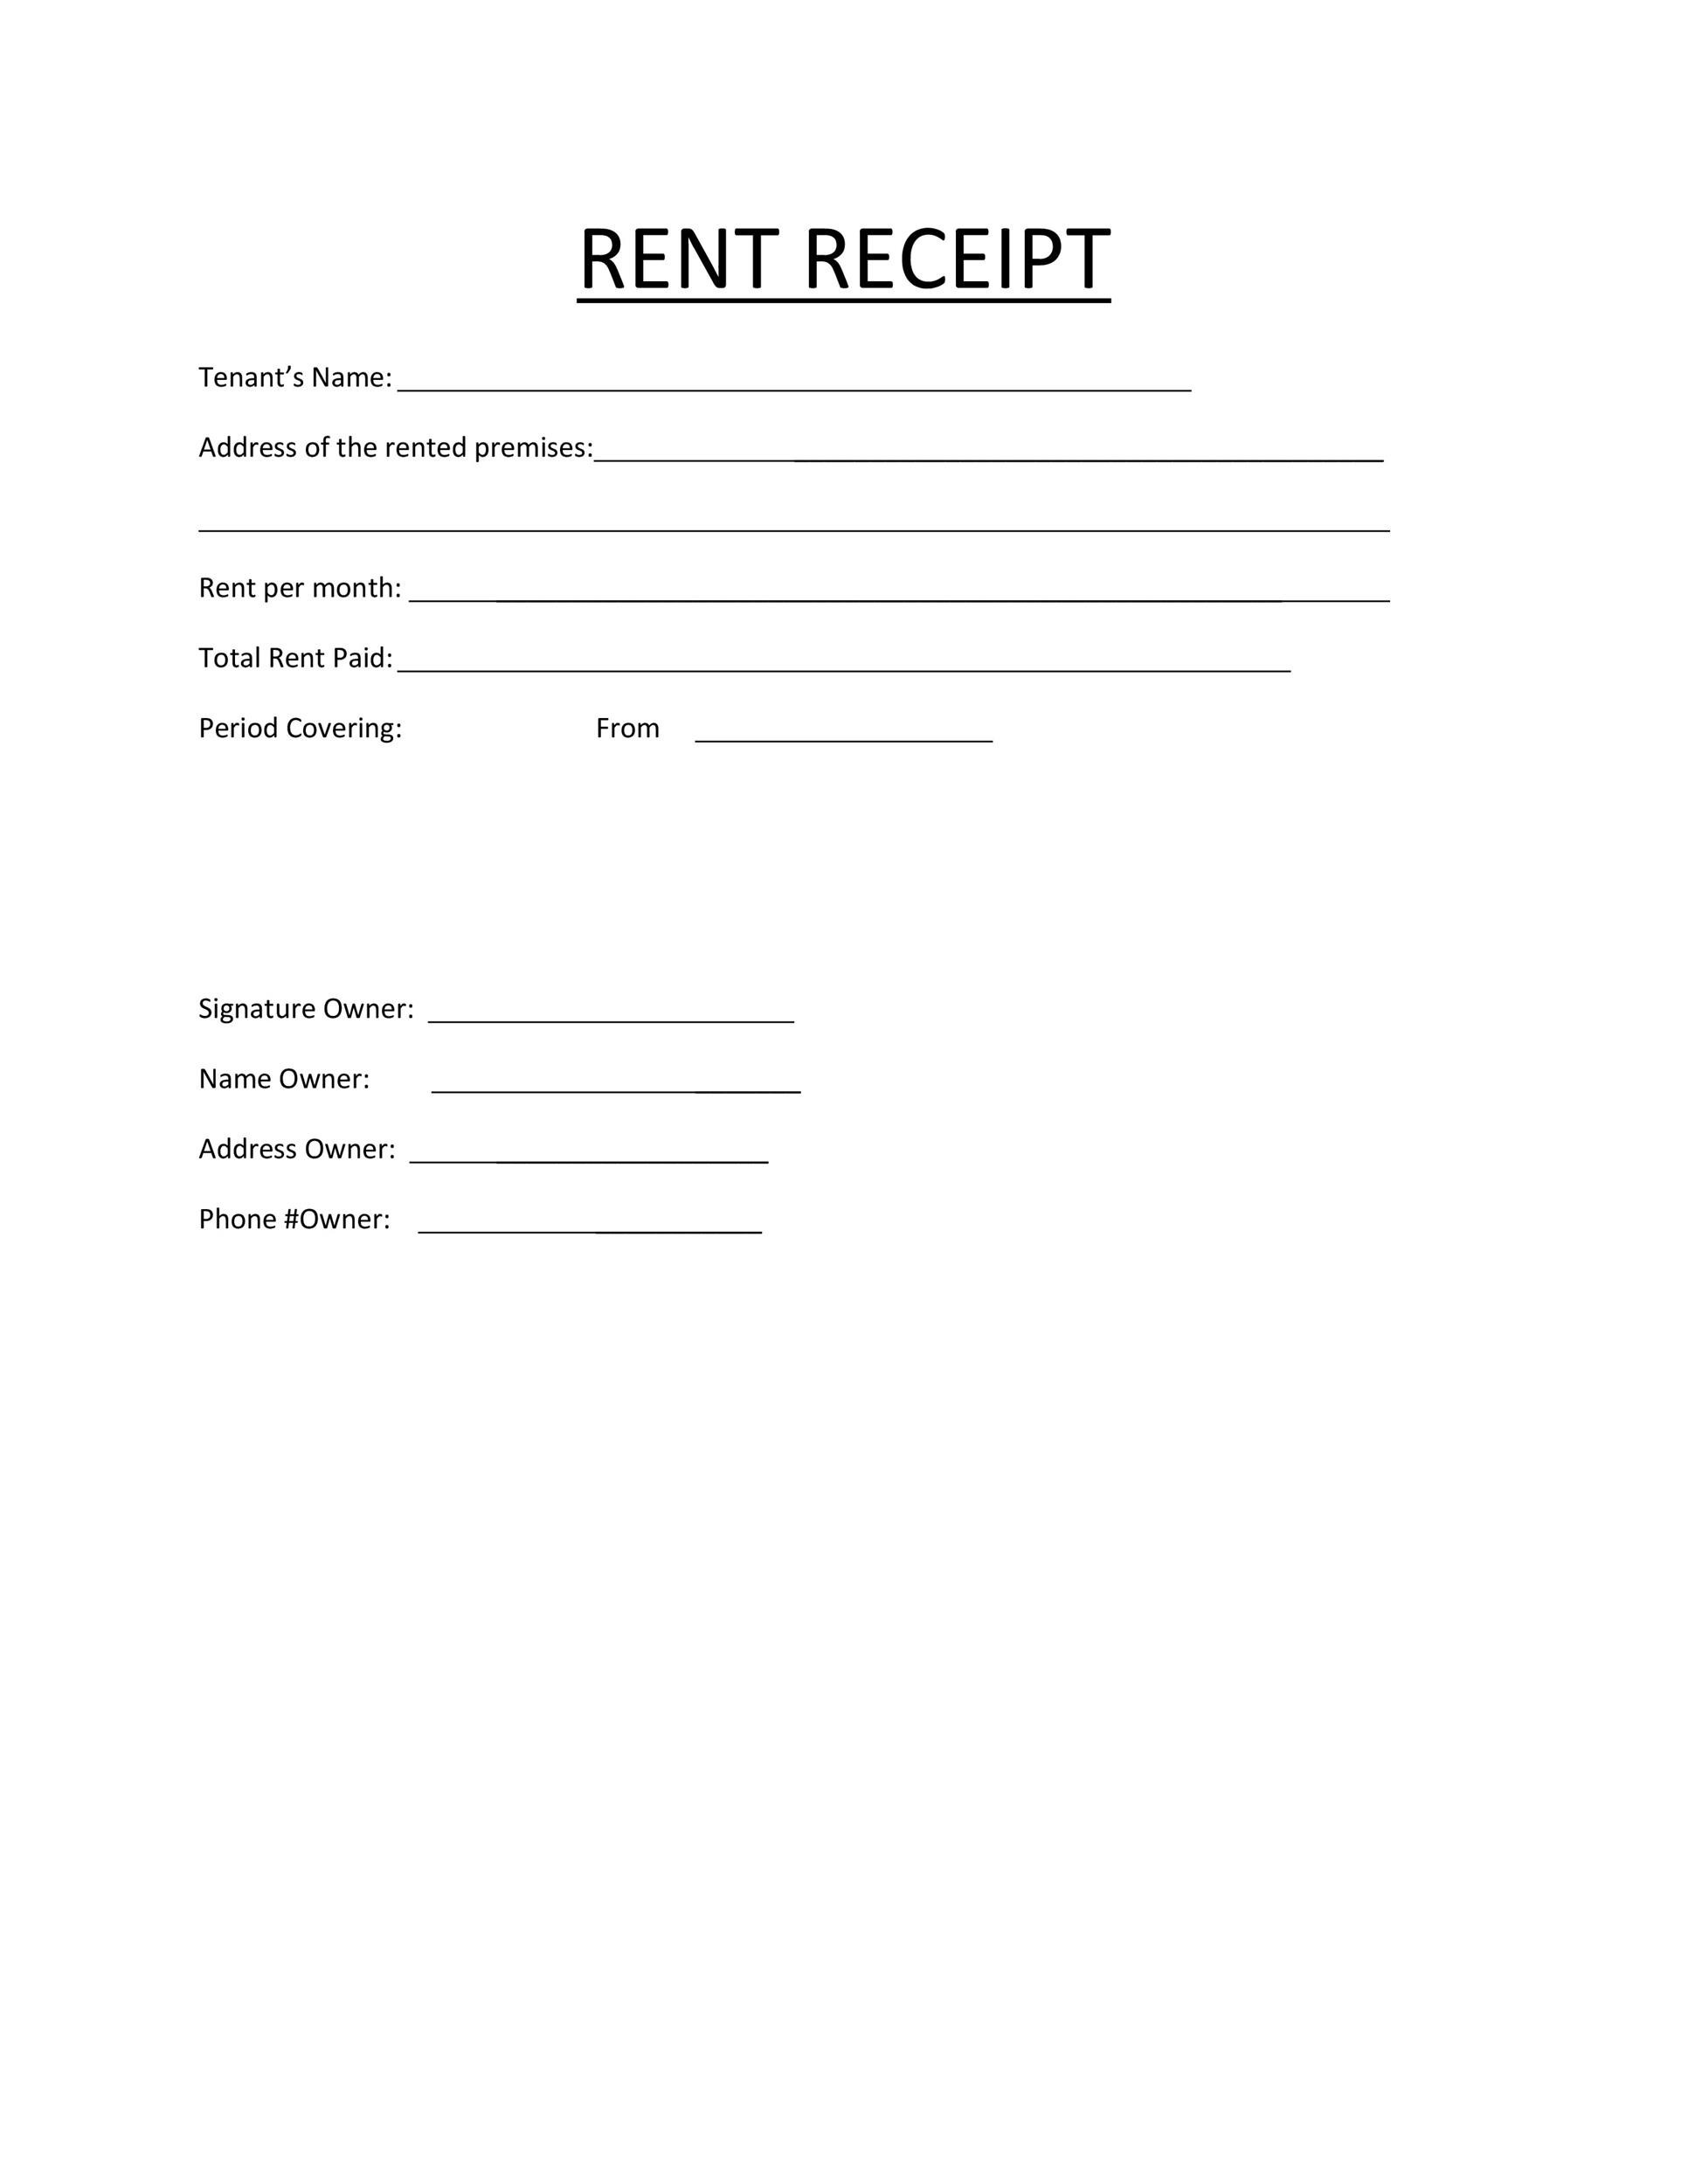 Rent Receipt Template Ontario Pdf Stunning Receipt Forms